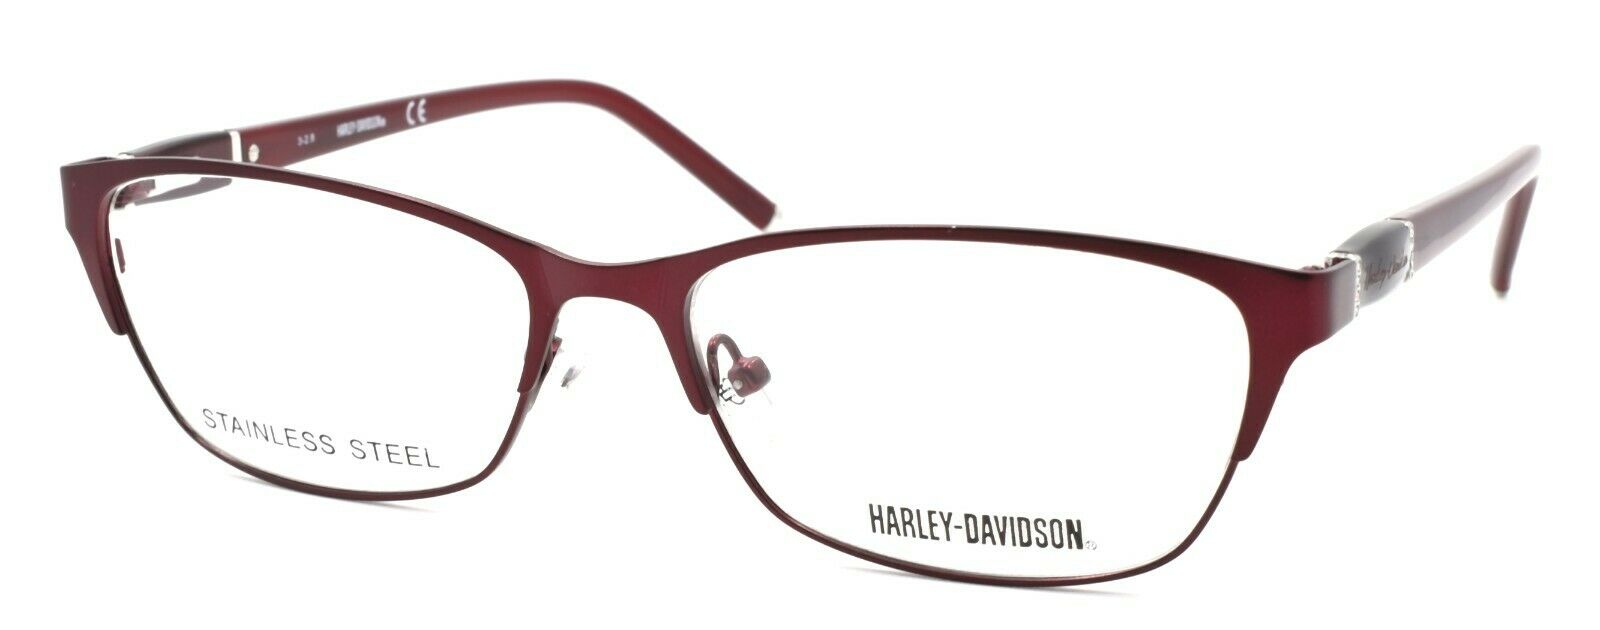 1-Harley Davidson HD0538 070 Women's Eyeglasses Frames 55-16-140 Matte Bordeaux-664689889129-IKSpecs